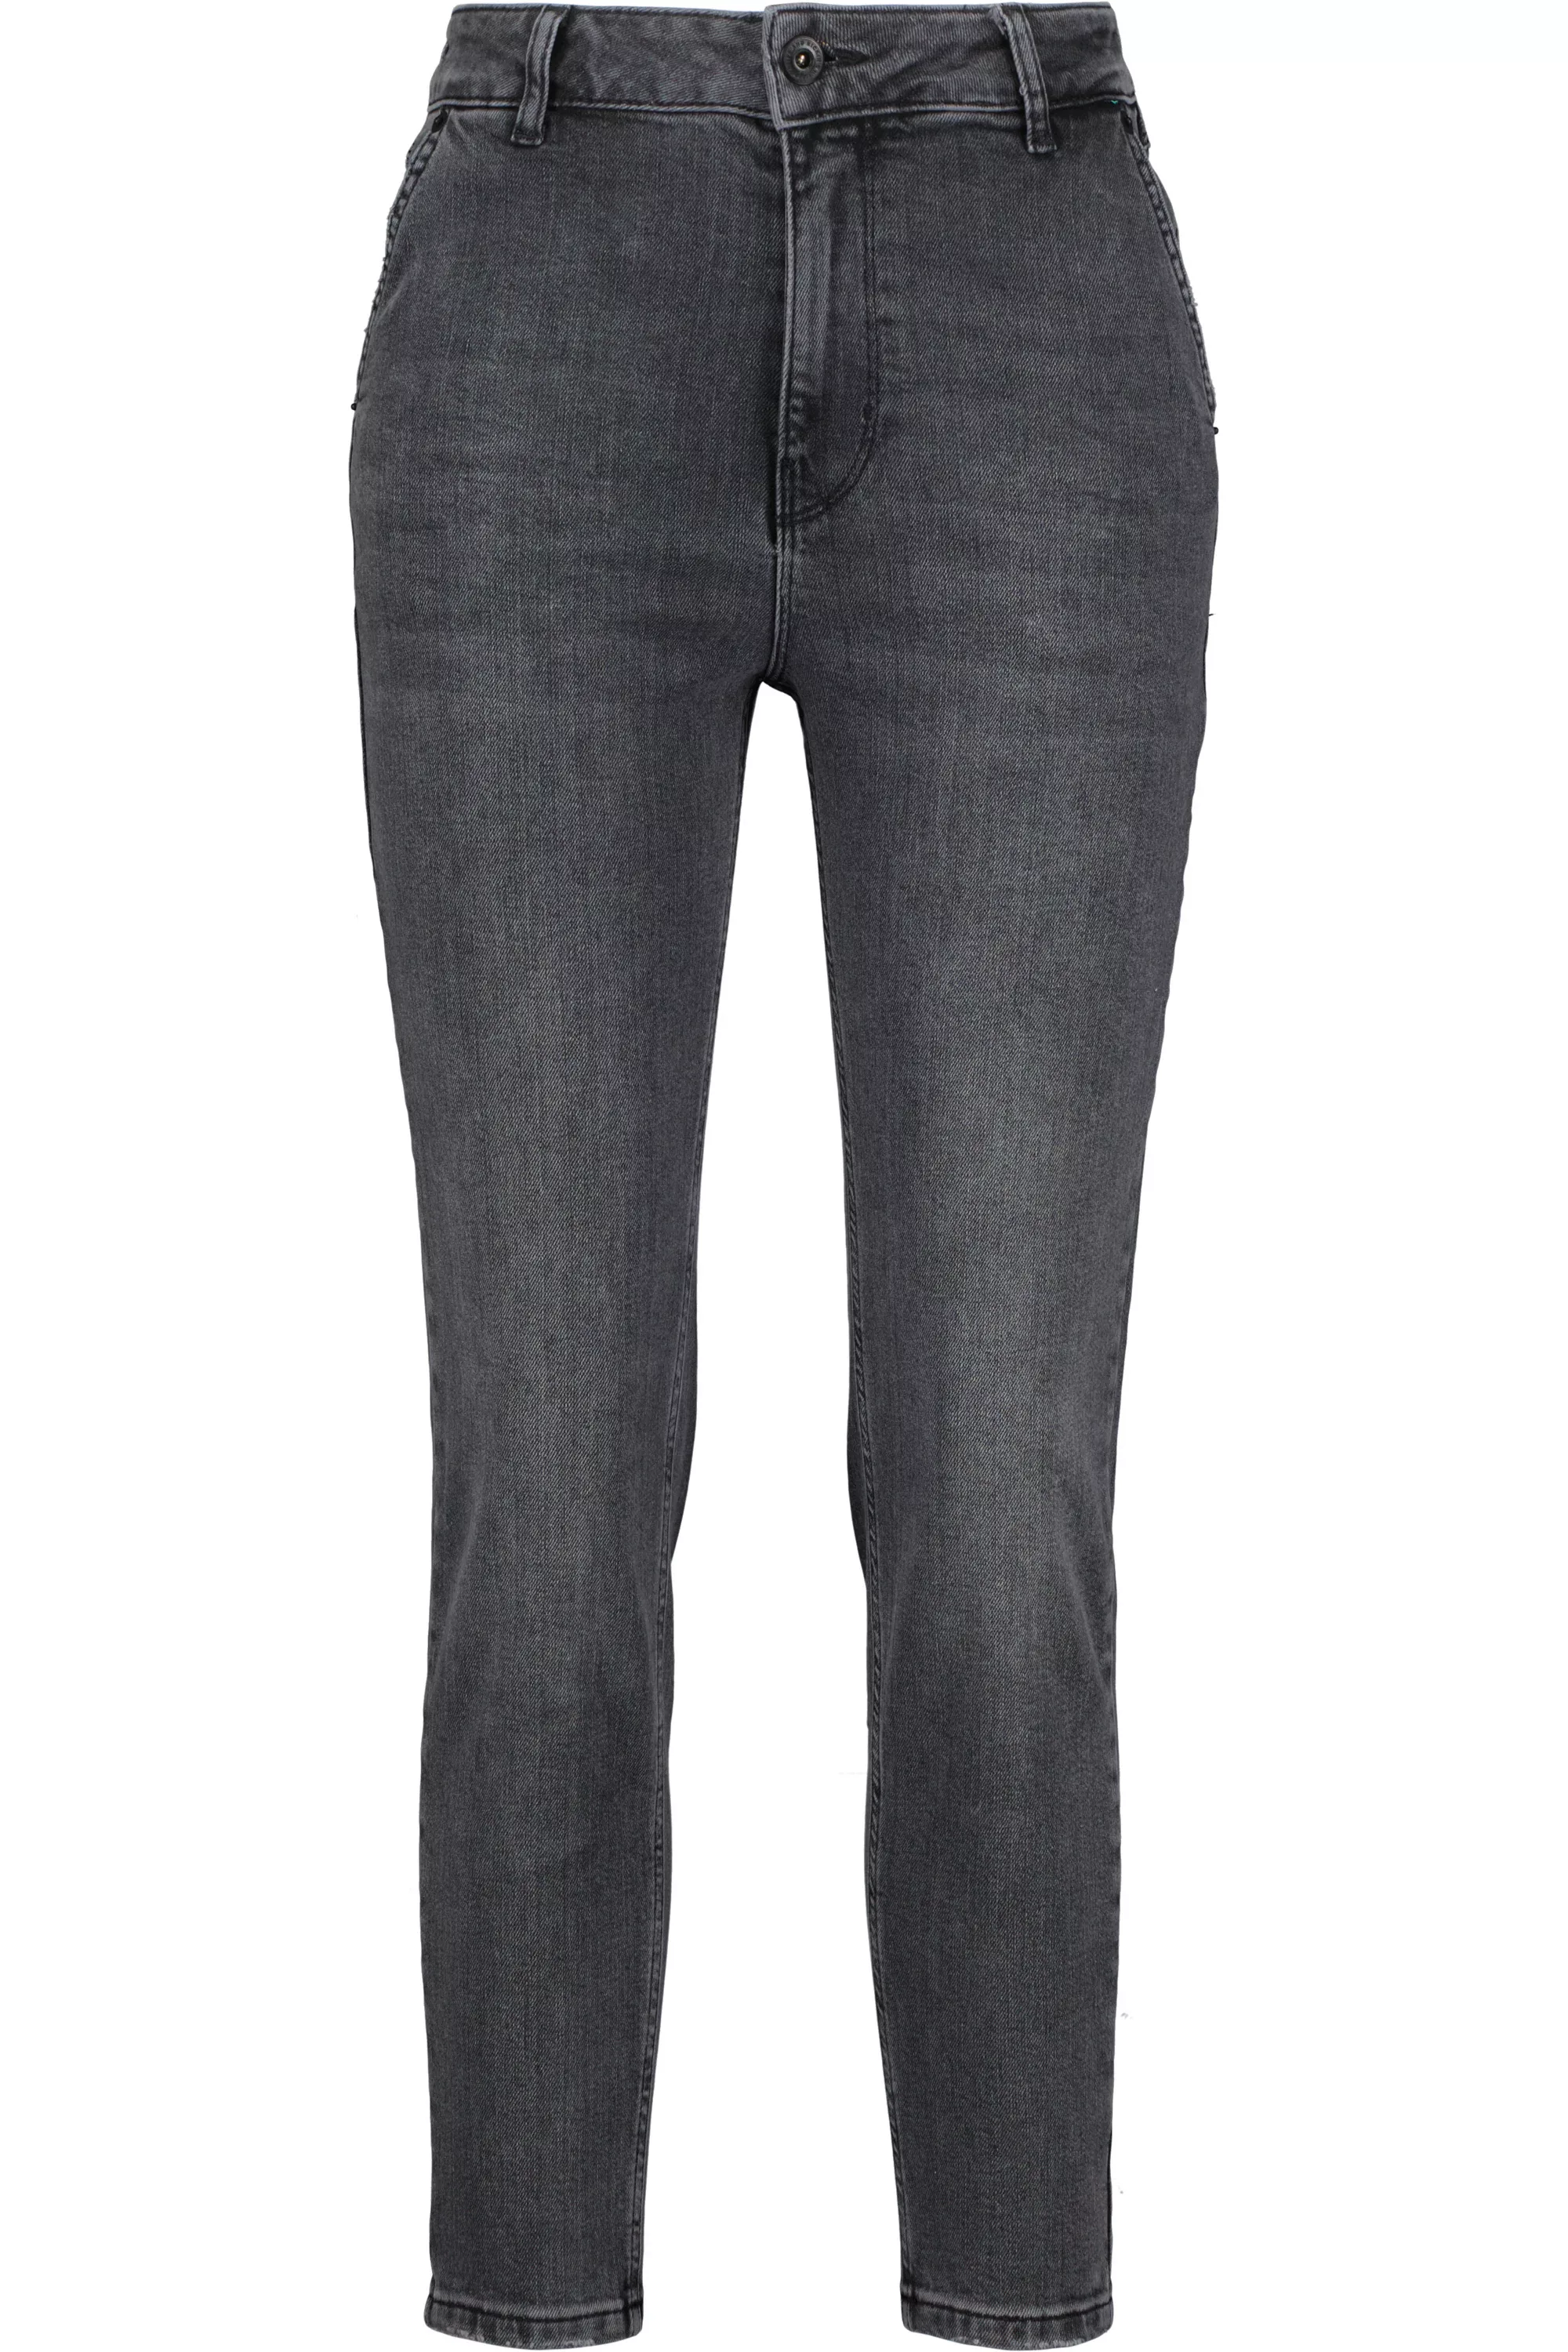 Alife & Kickin Mom-Jeans "LaureenAK DNM Q Pants Damen Jeanshose" günstig online kaufen